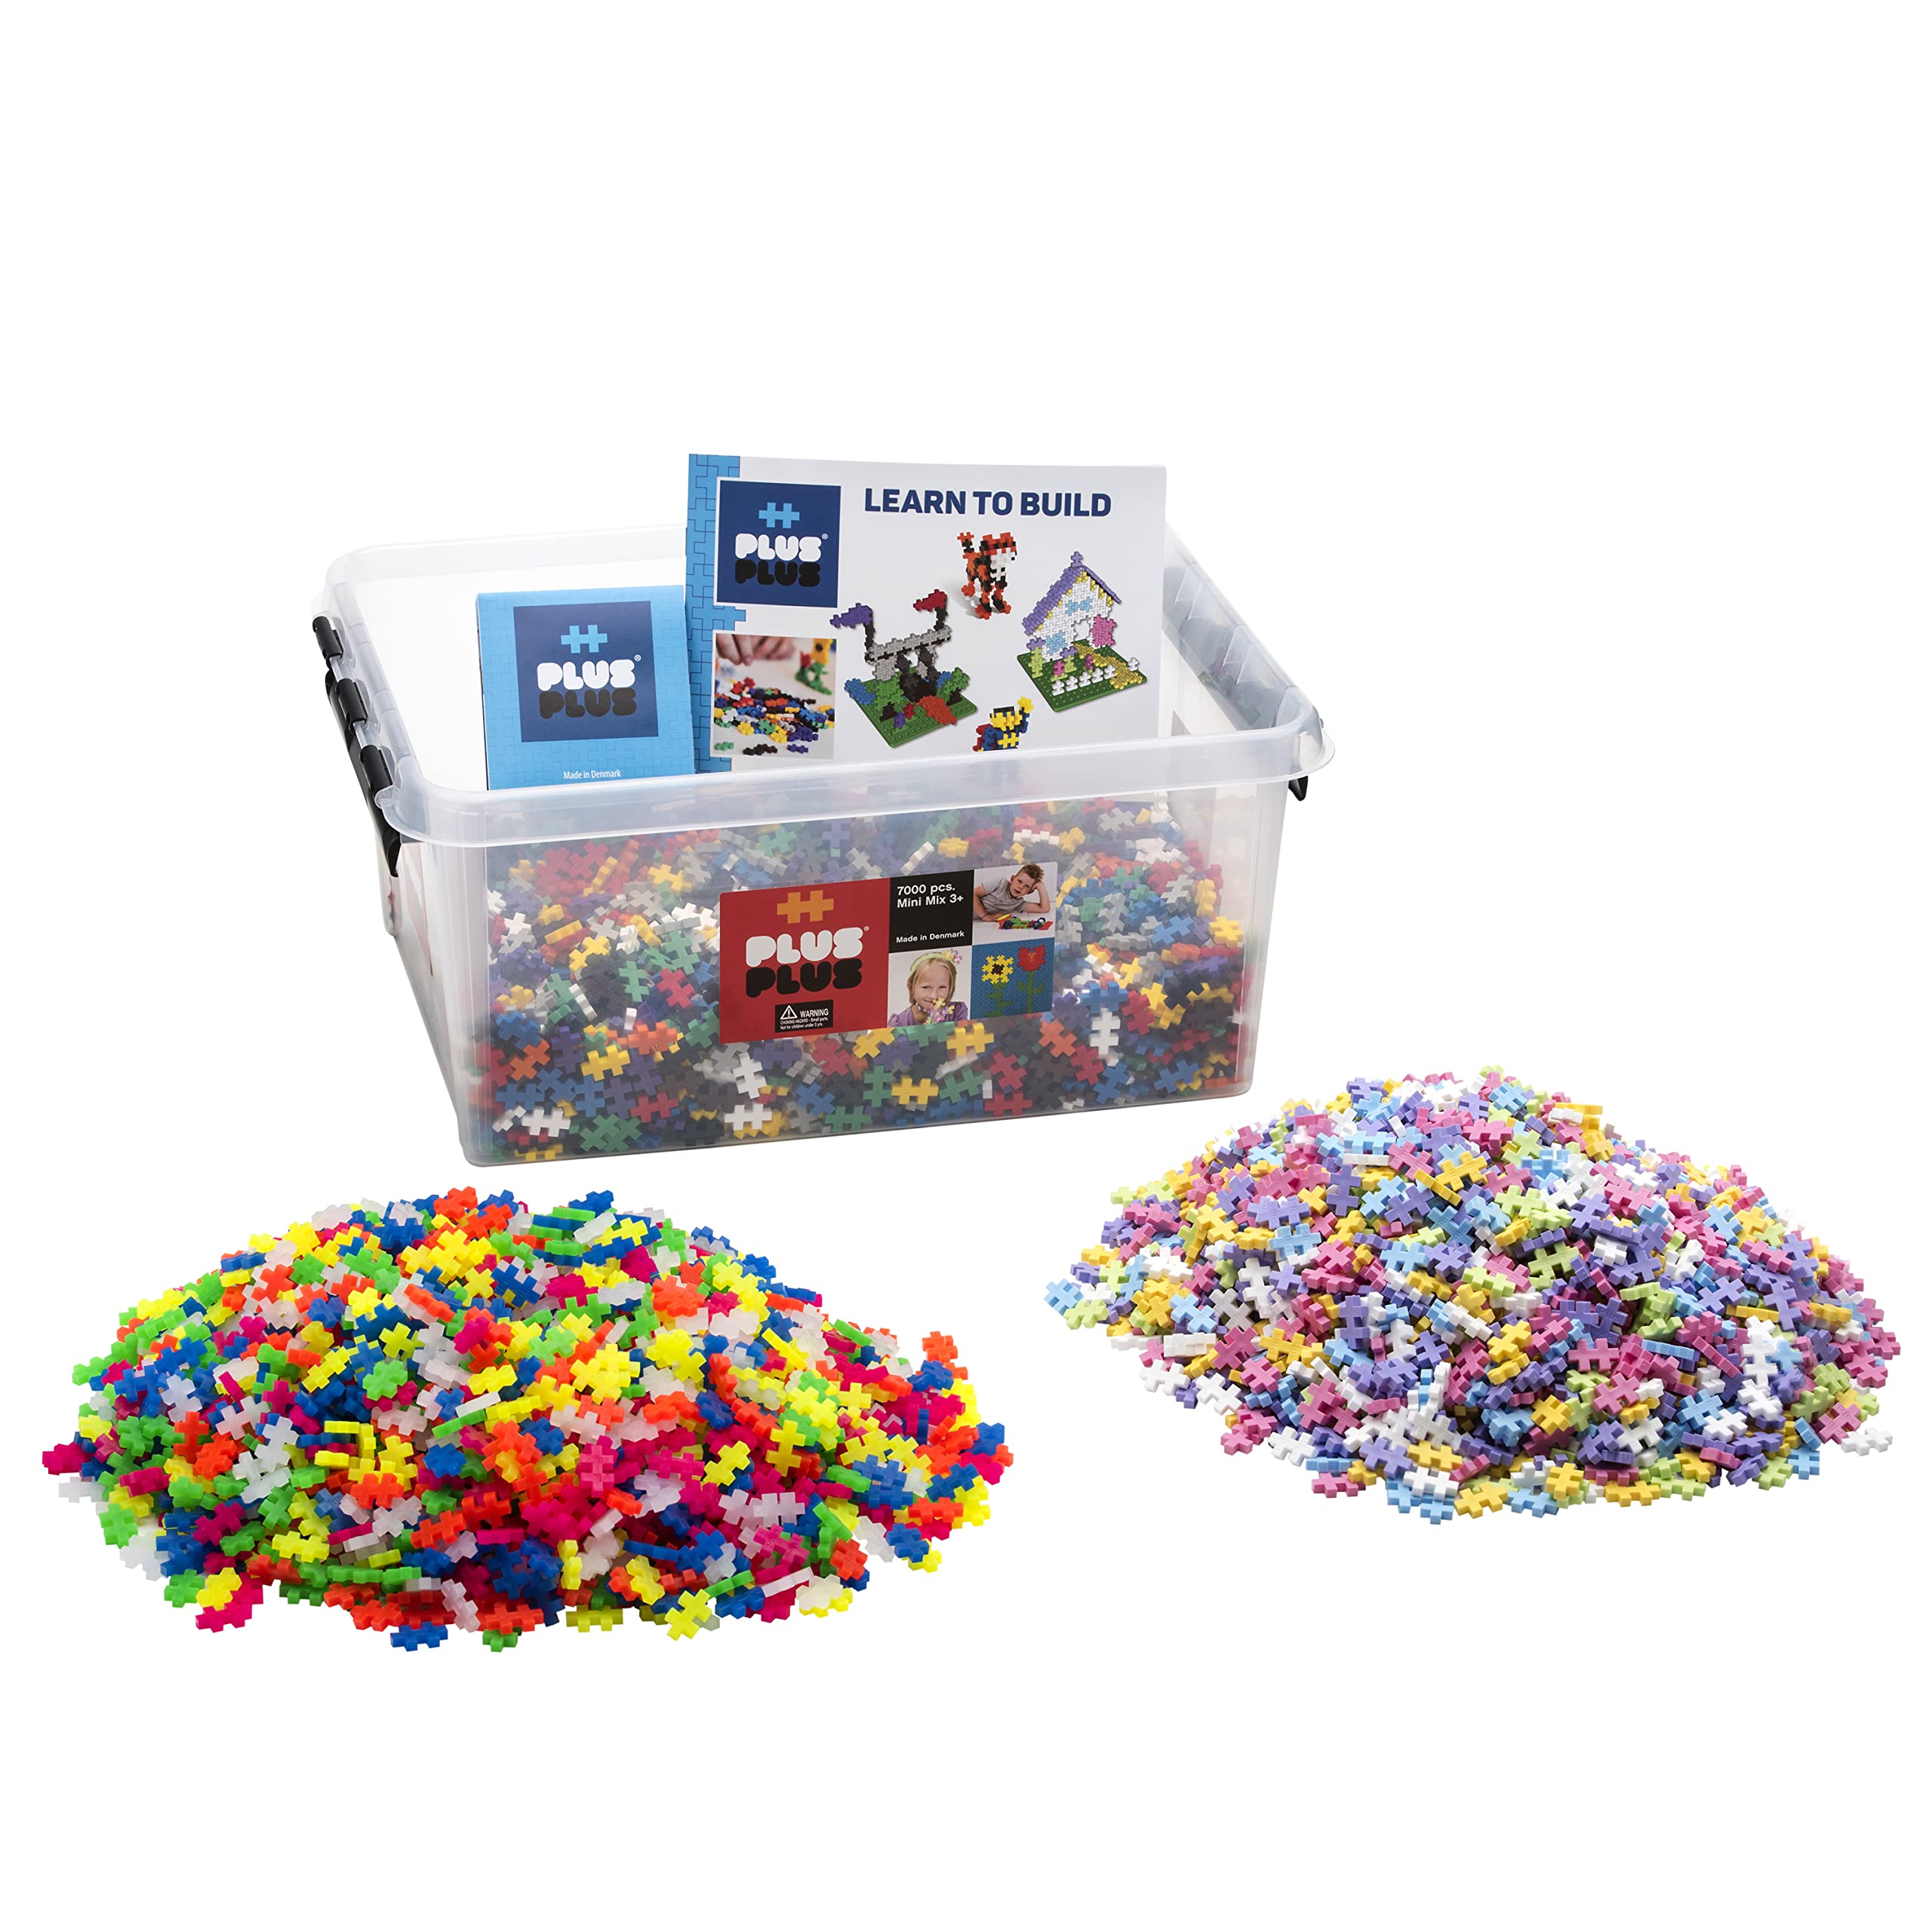 PLUS PLUS - Open Play Set - 7,000 Piece in Storage Tub - Basic, Neon, & Pastel Color Mix - Construction Building Stem Toy, Interlocking Mini Puzzle Blocks for Kids